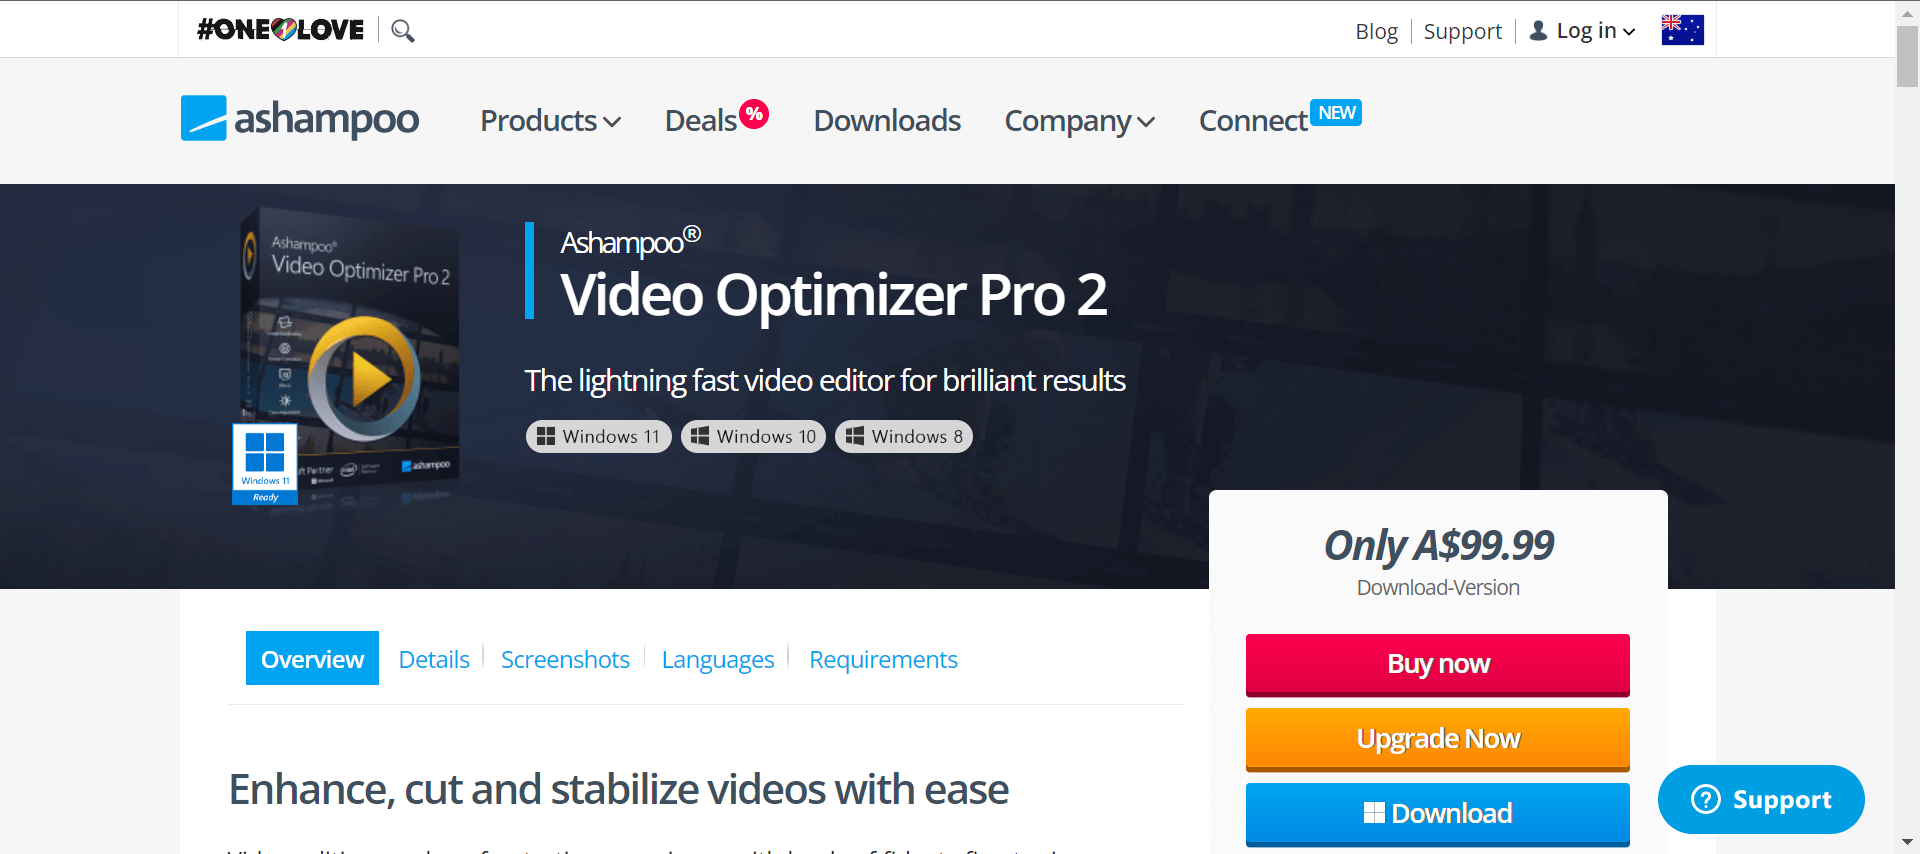 Ashampoo Video Optimizer Pro 2's website